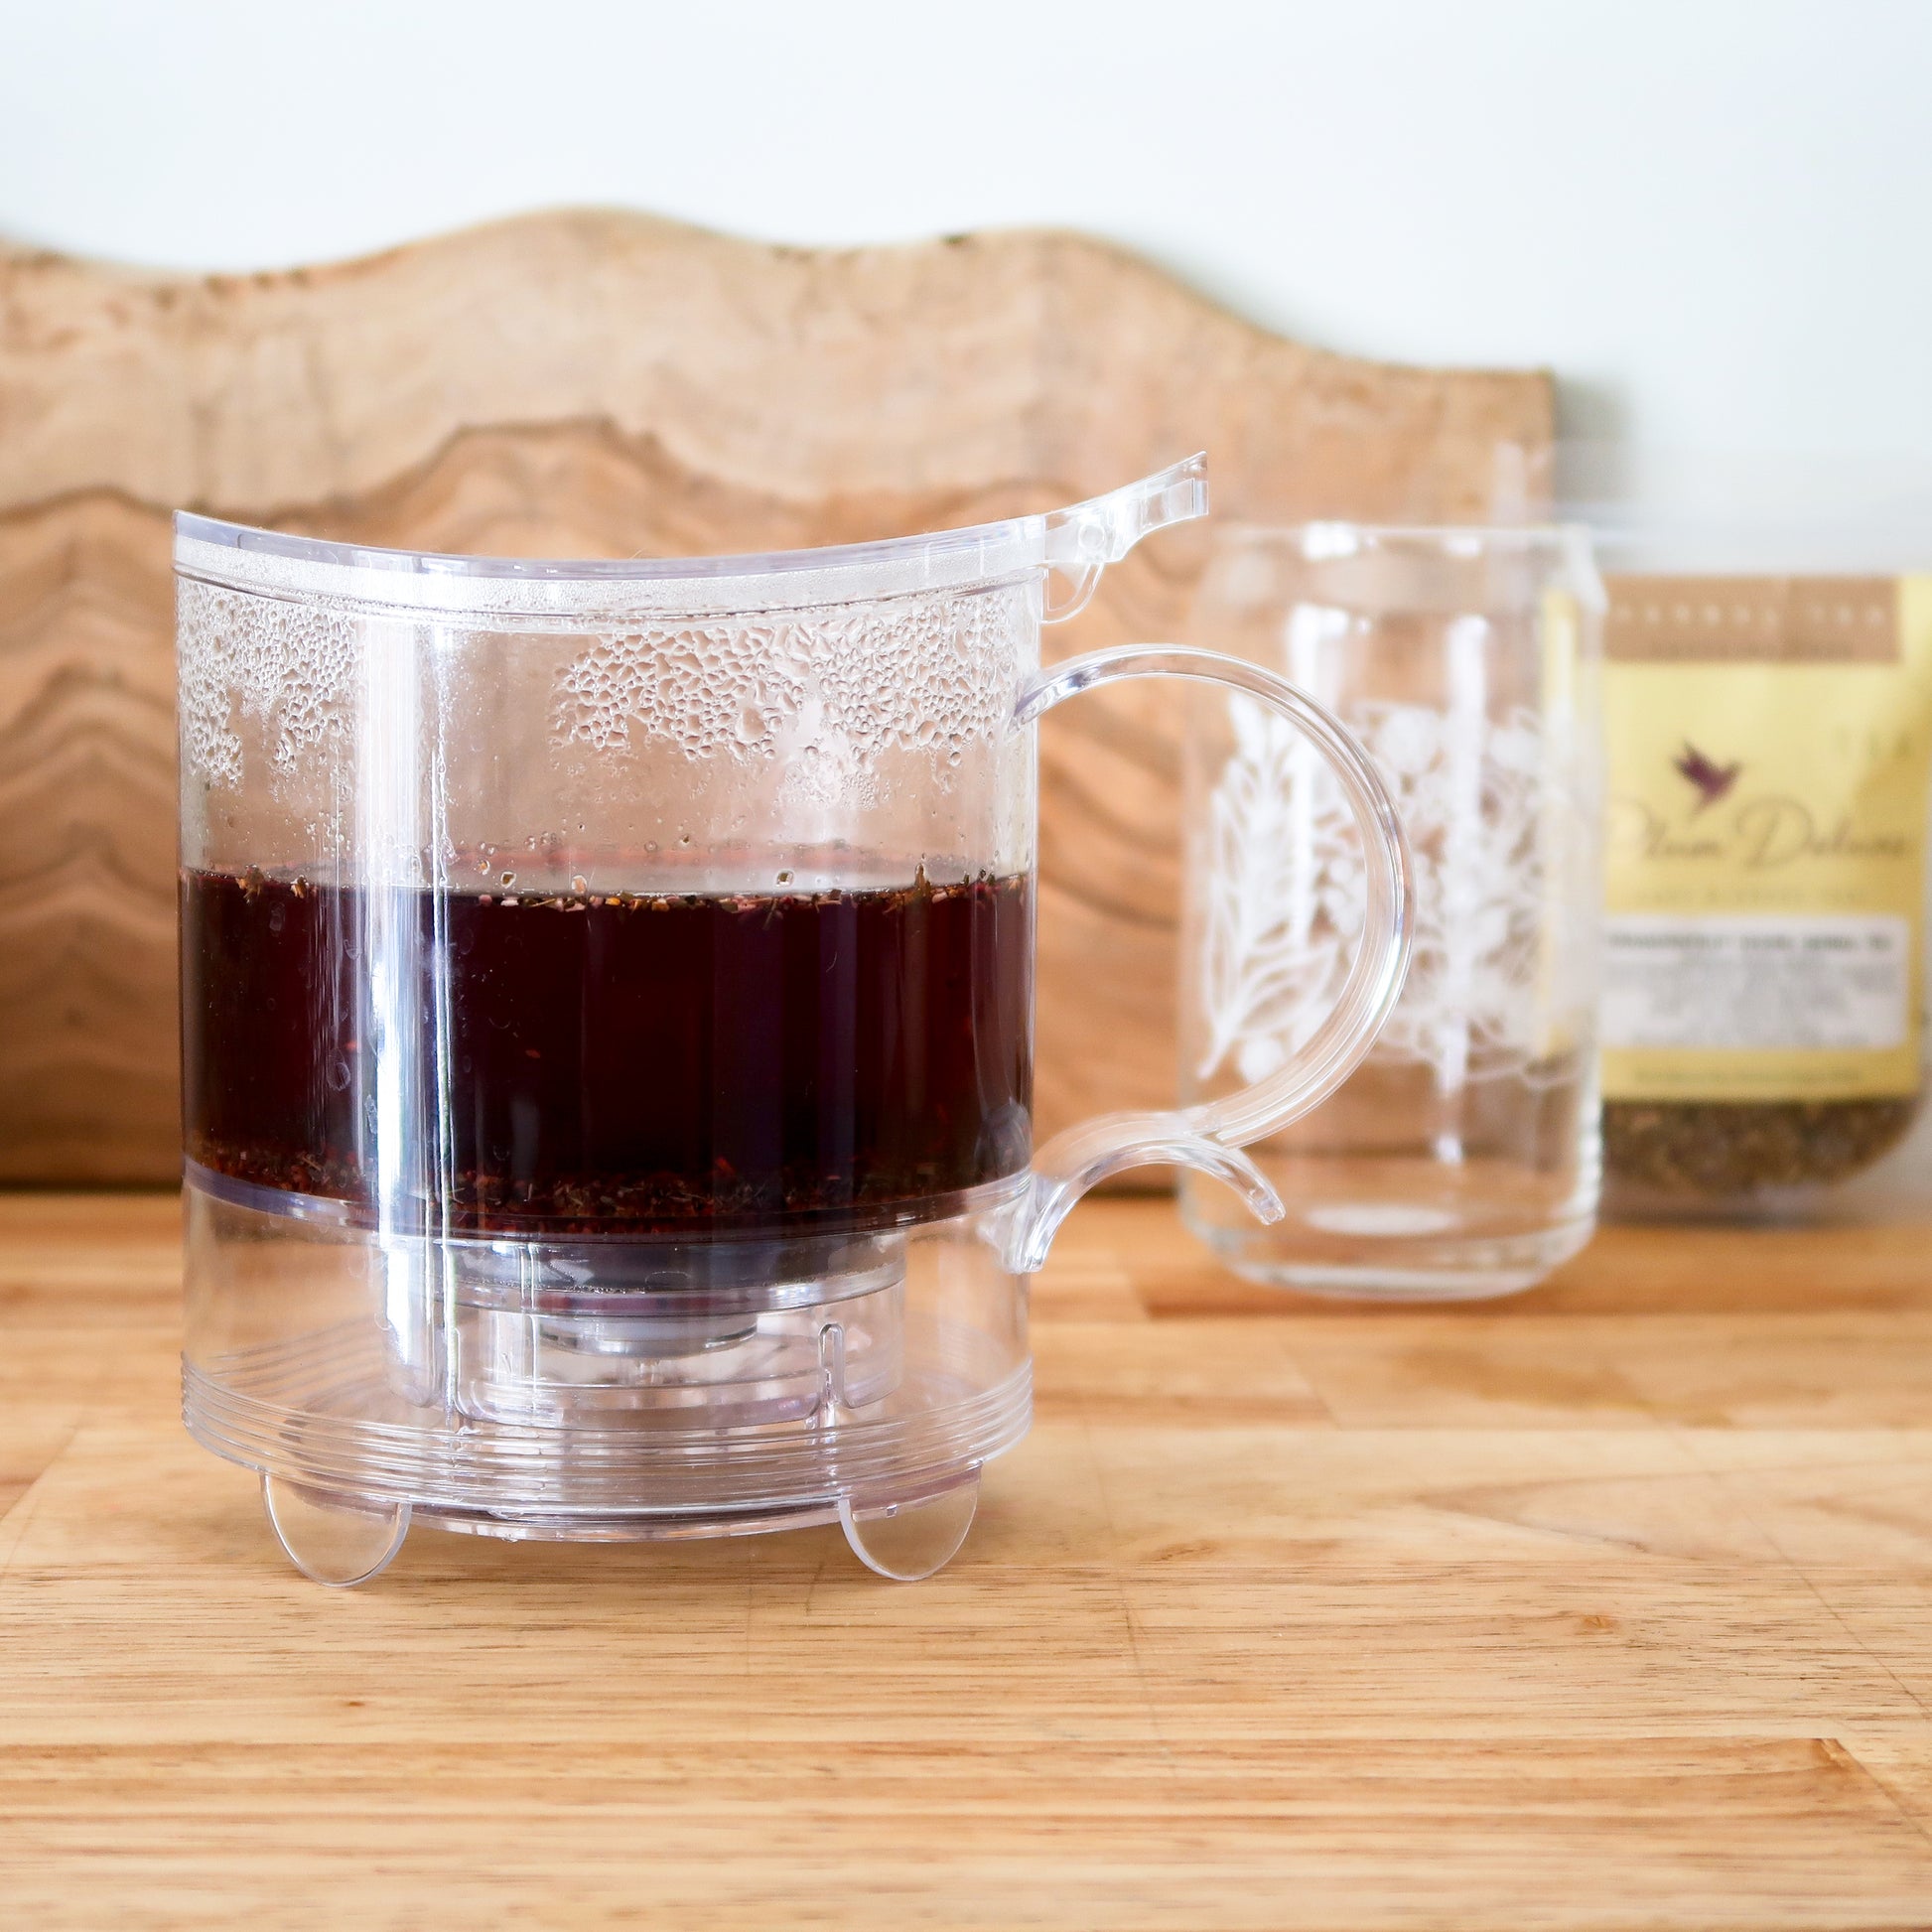 Sips by Gravity Loose Leaf Tea Maker | Tea Infusers for Loose Tea | 16 oz Tea Steeper | Stainless Steel Loose Leaf Tea Filter | Tea Gift Sets